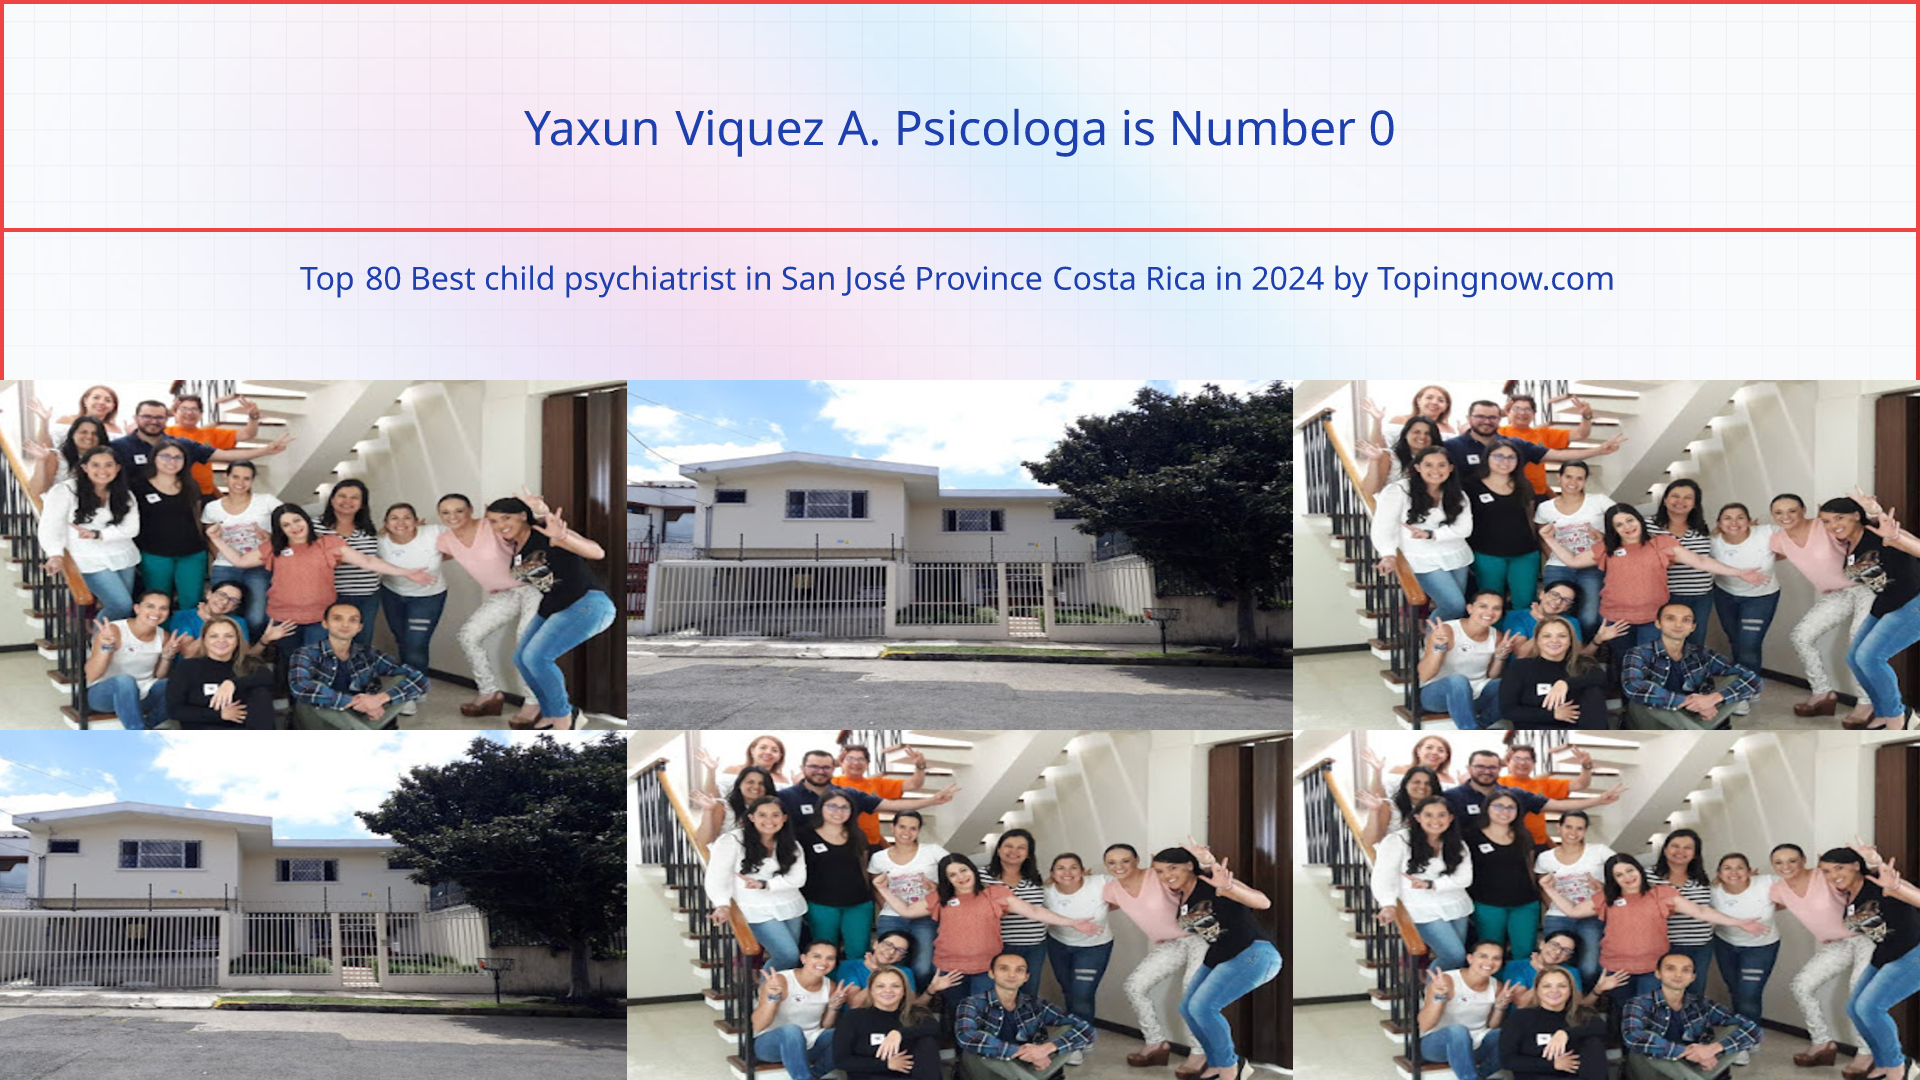 Yaxun Viquez A. Psicologa: Top 80 Best child psychiatrist in San José Province Costa Rica in 2024